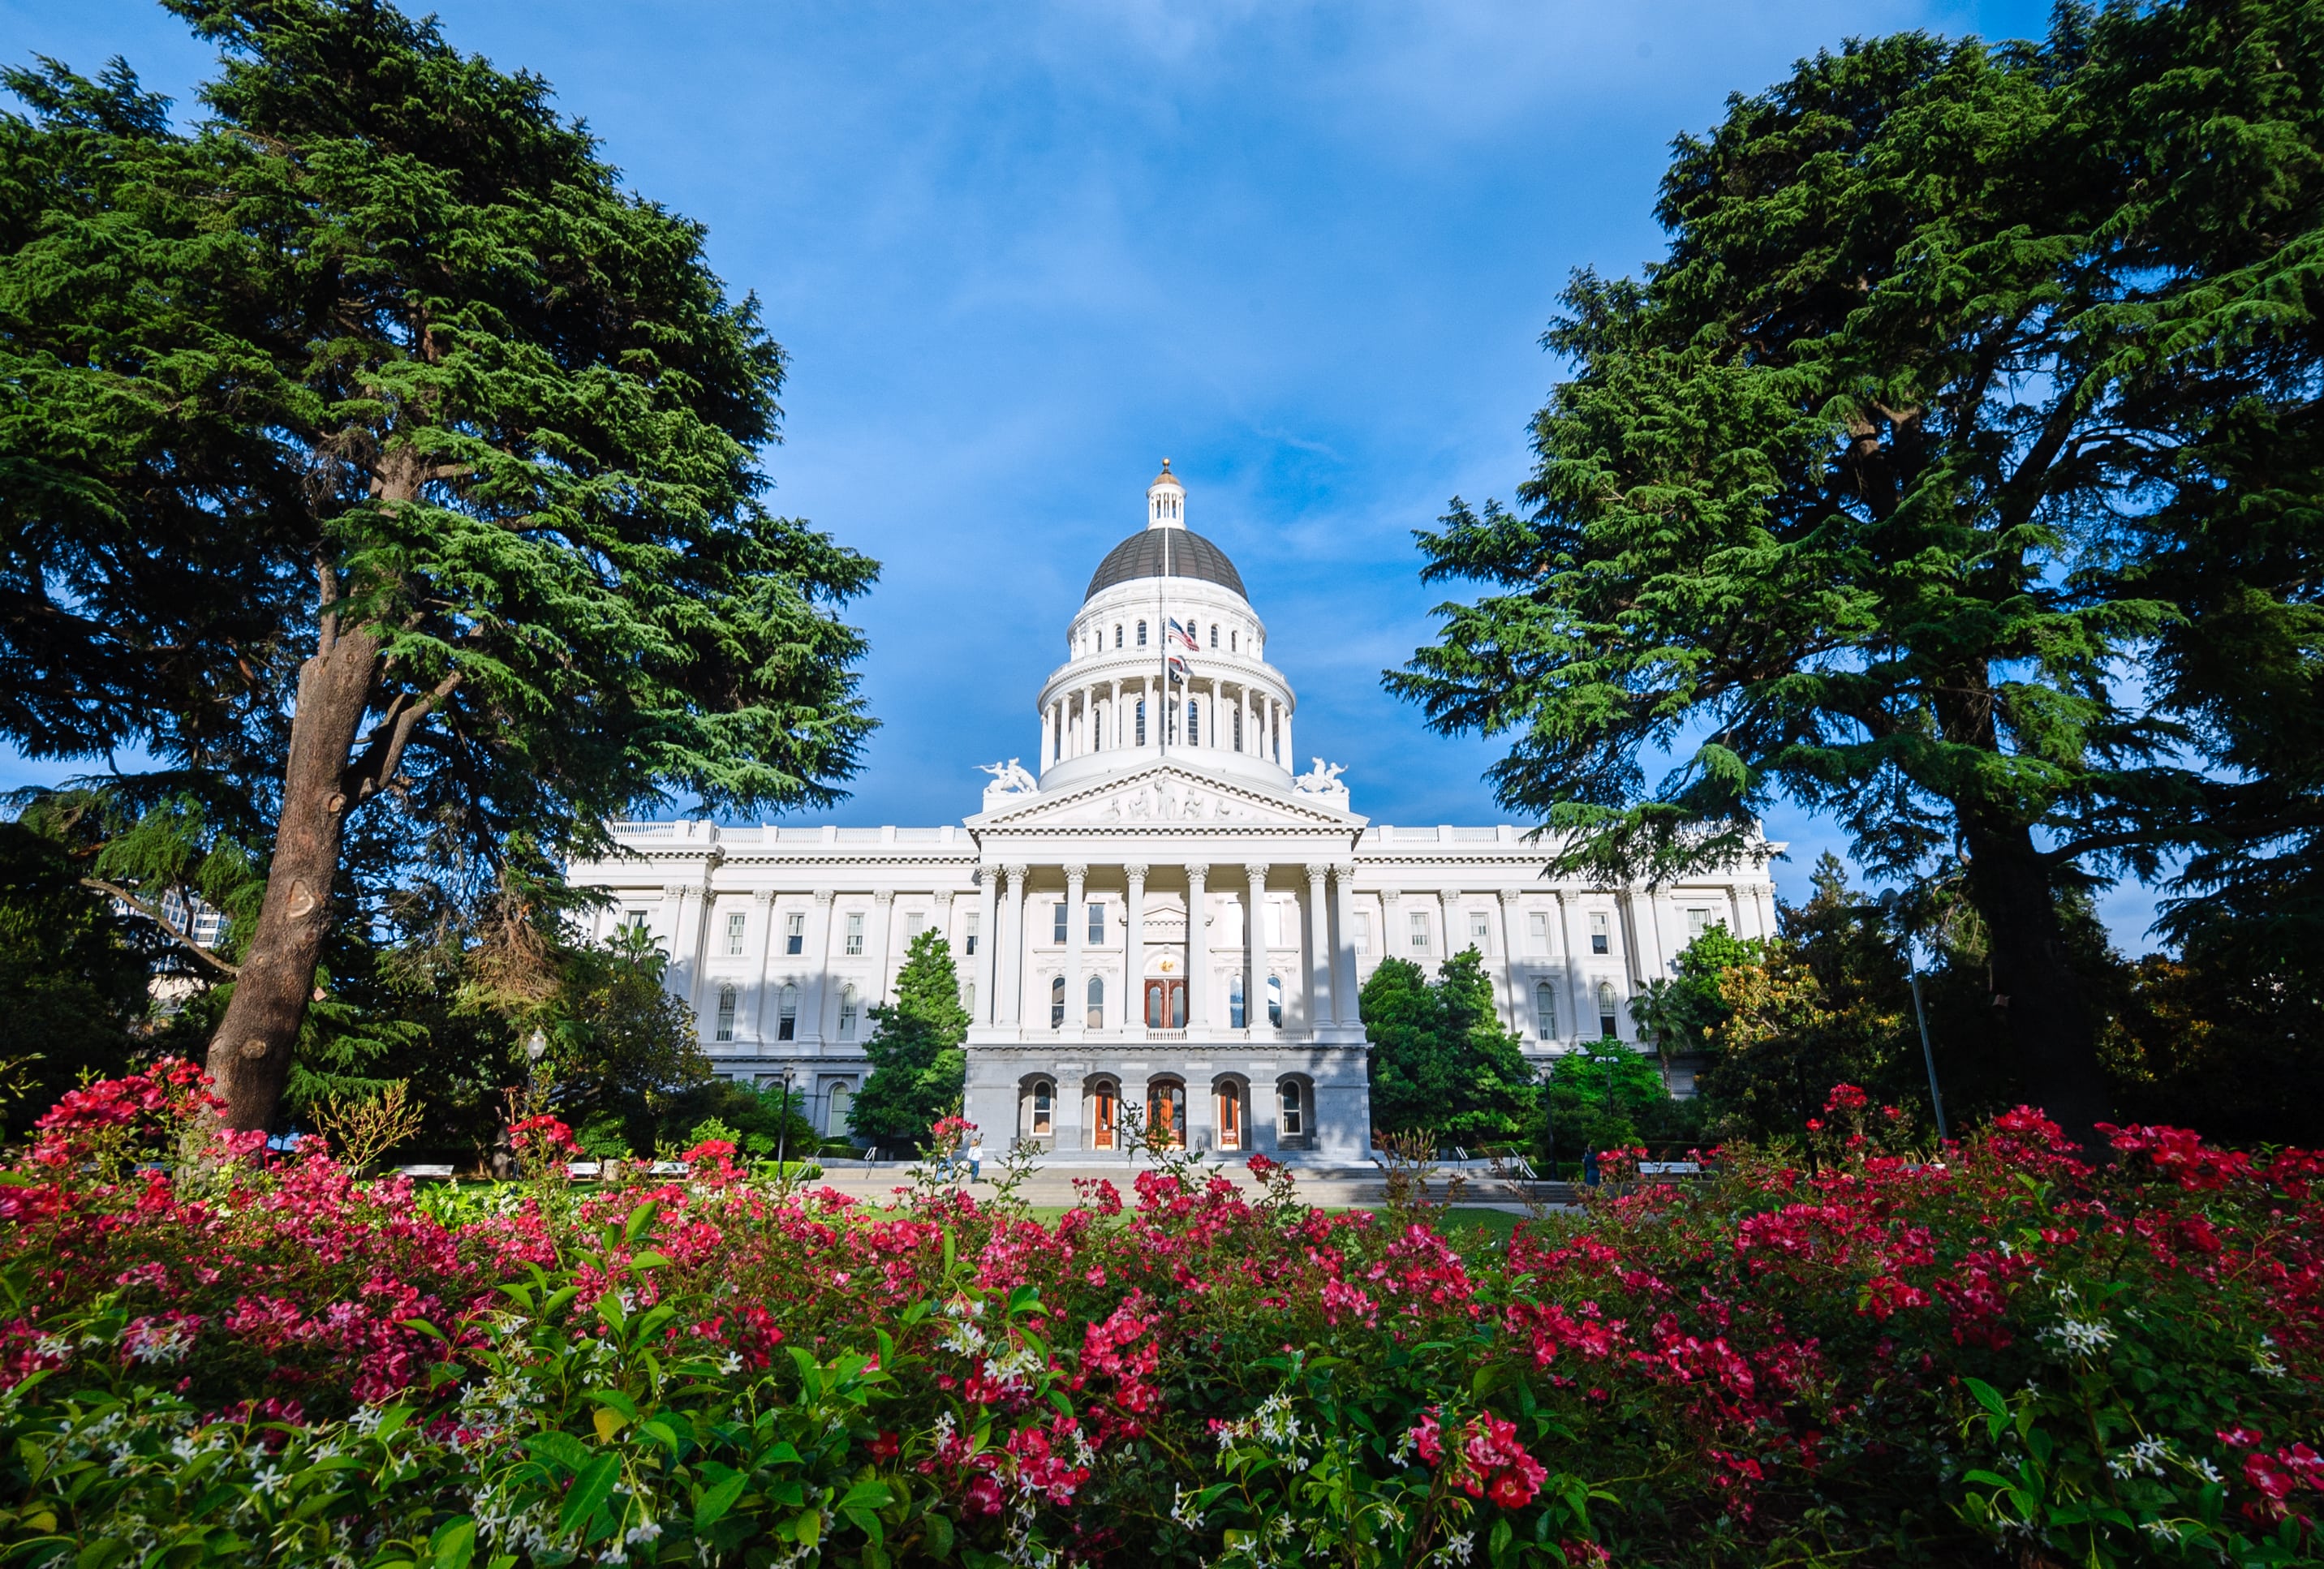 California State Capitol Building